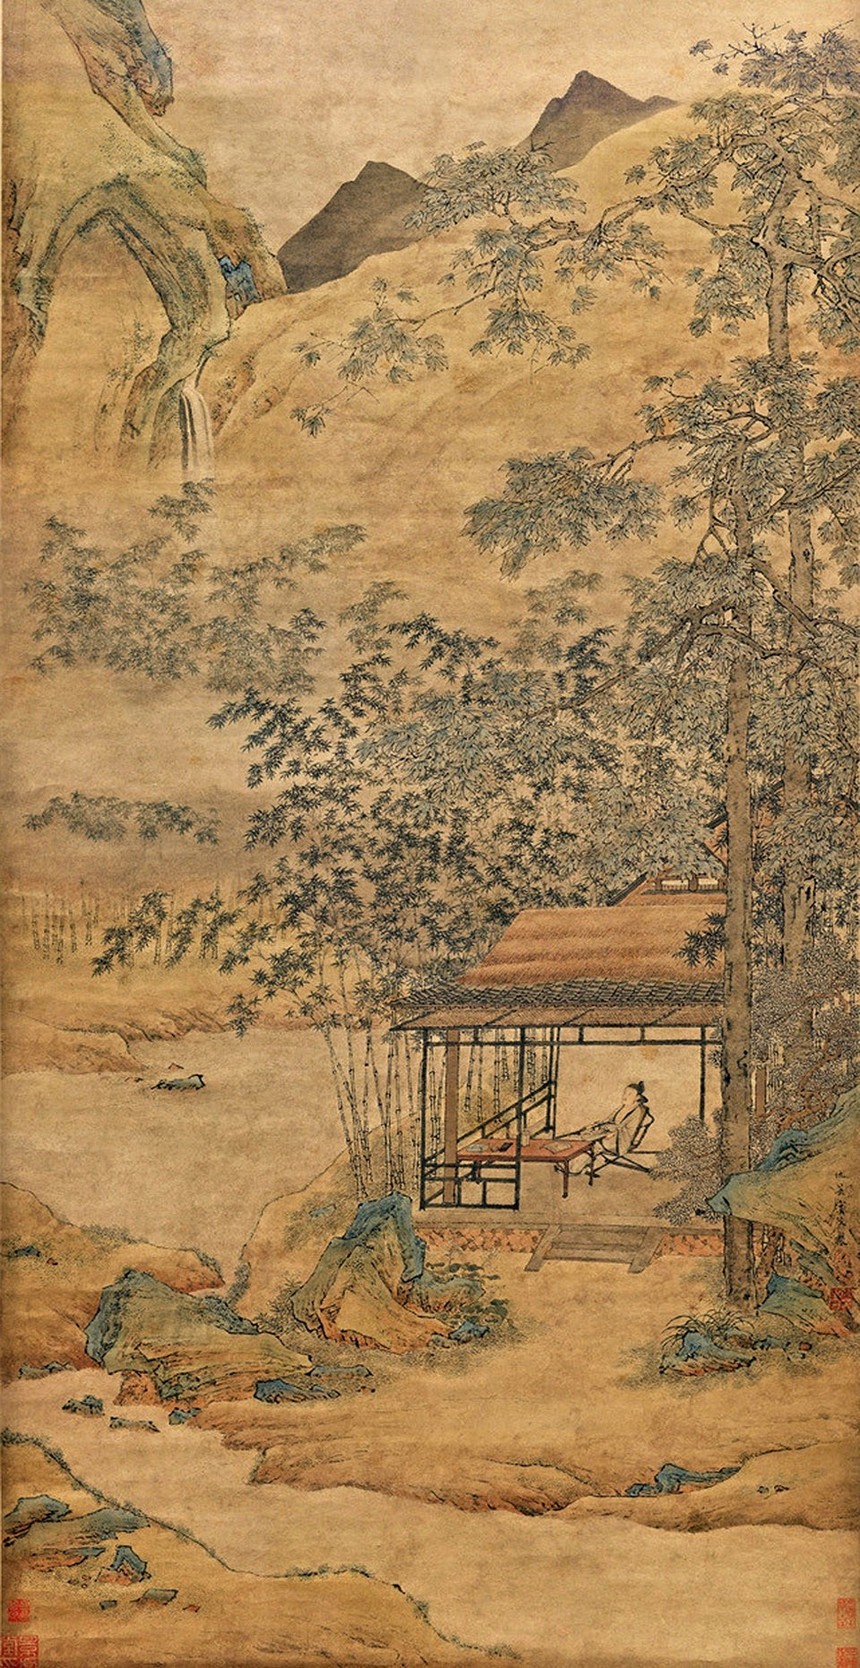 021-bamboo-branch-academy-china-by-archermit-960x1862.jpg